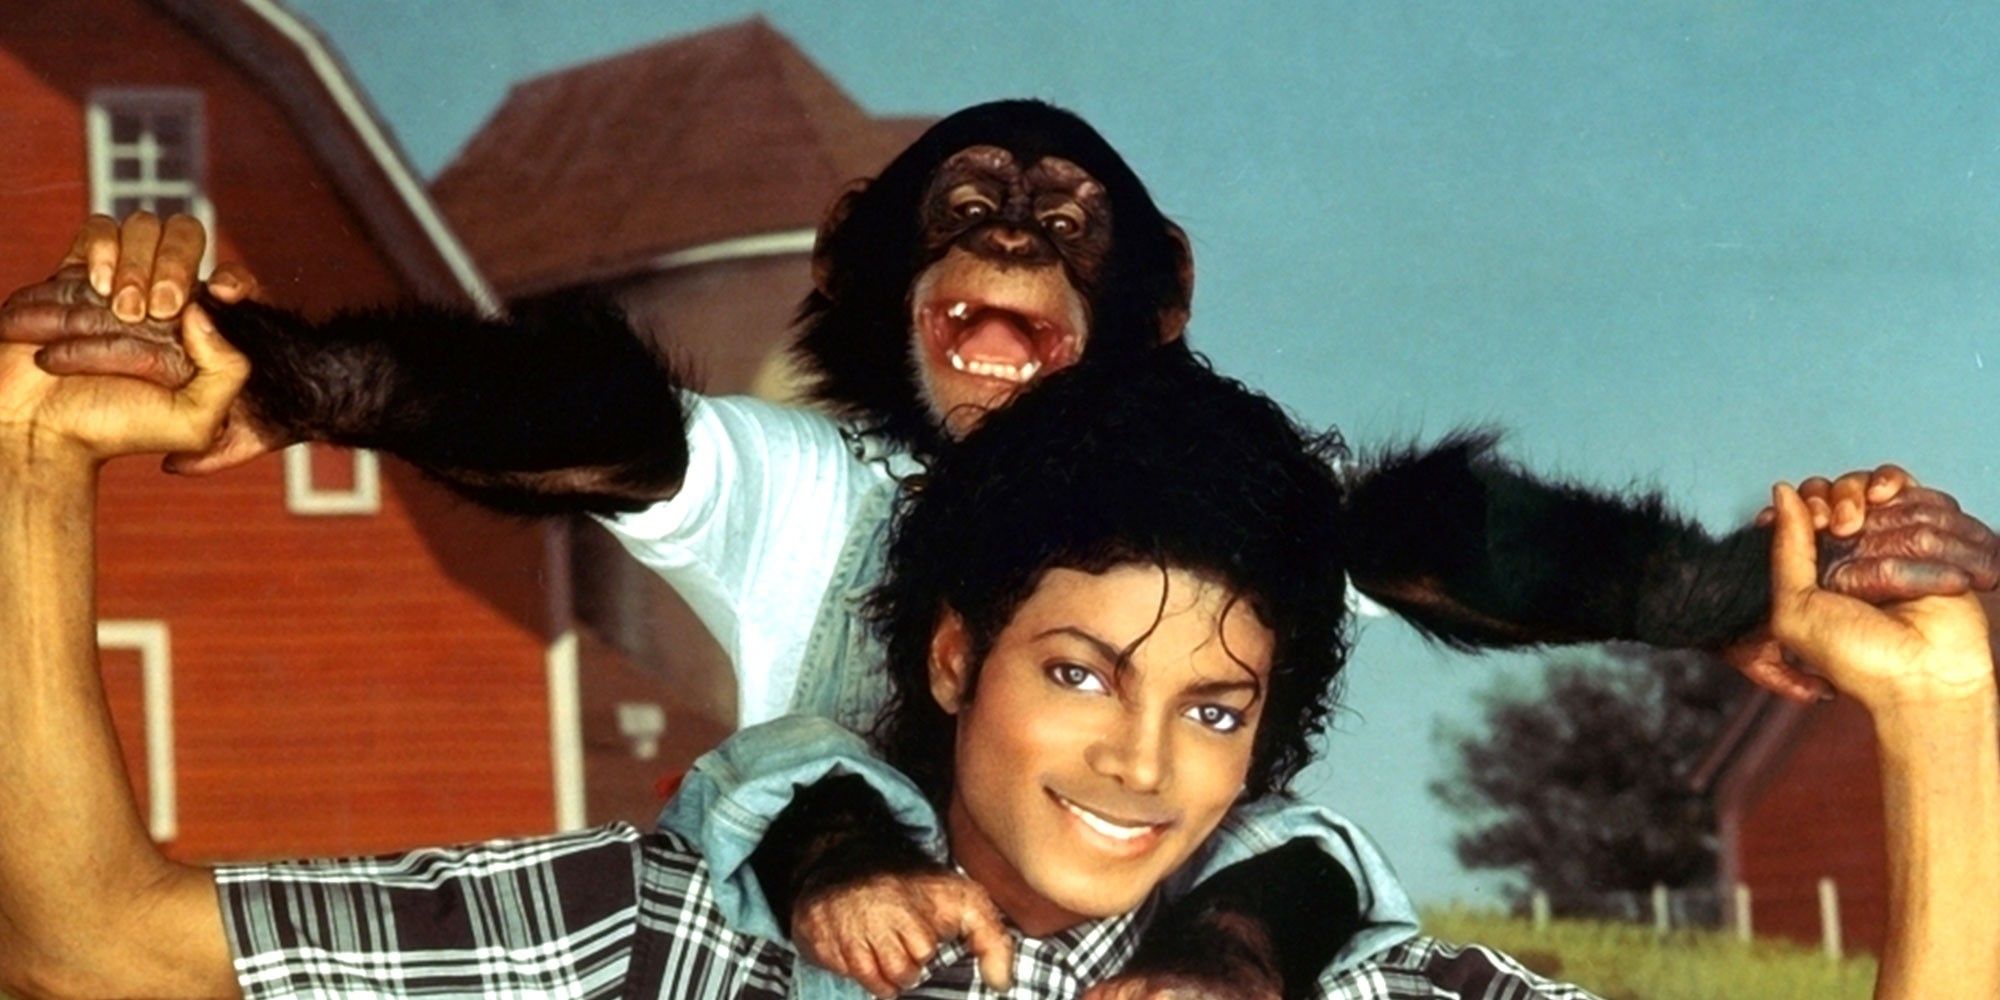 Michael Jackson and Bubbles